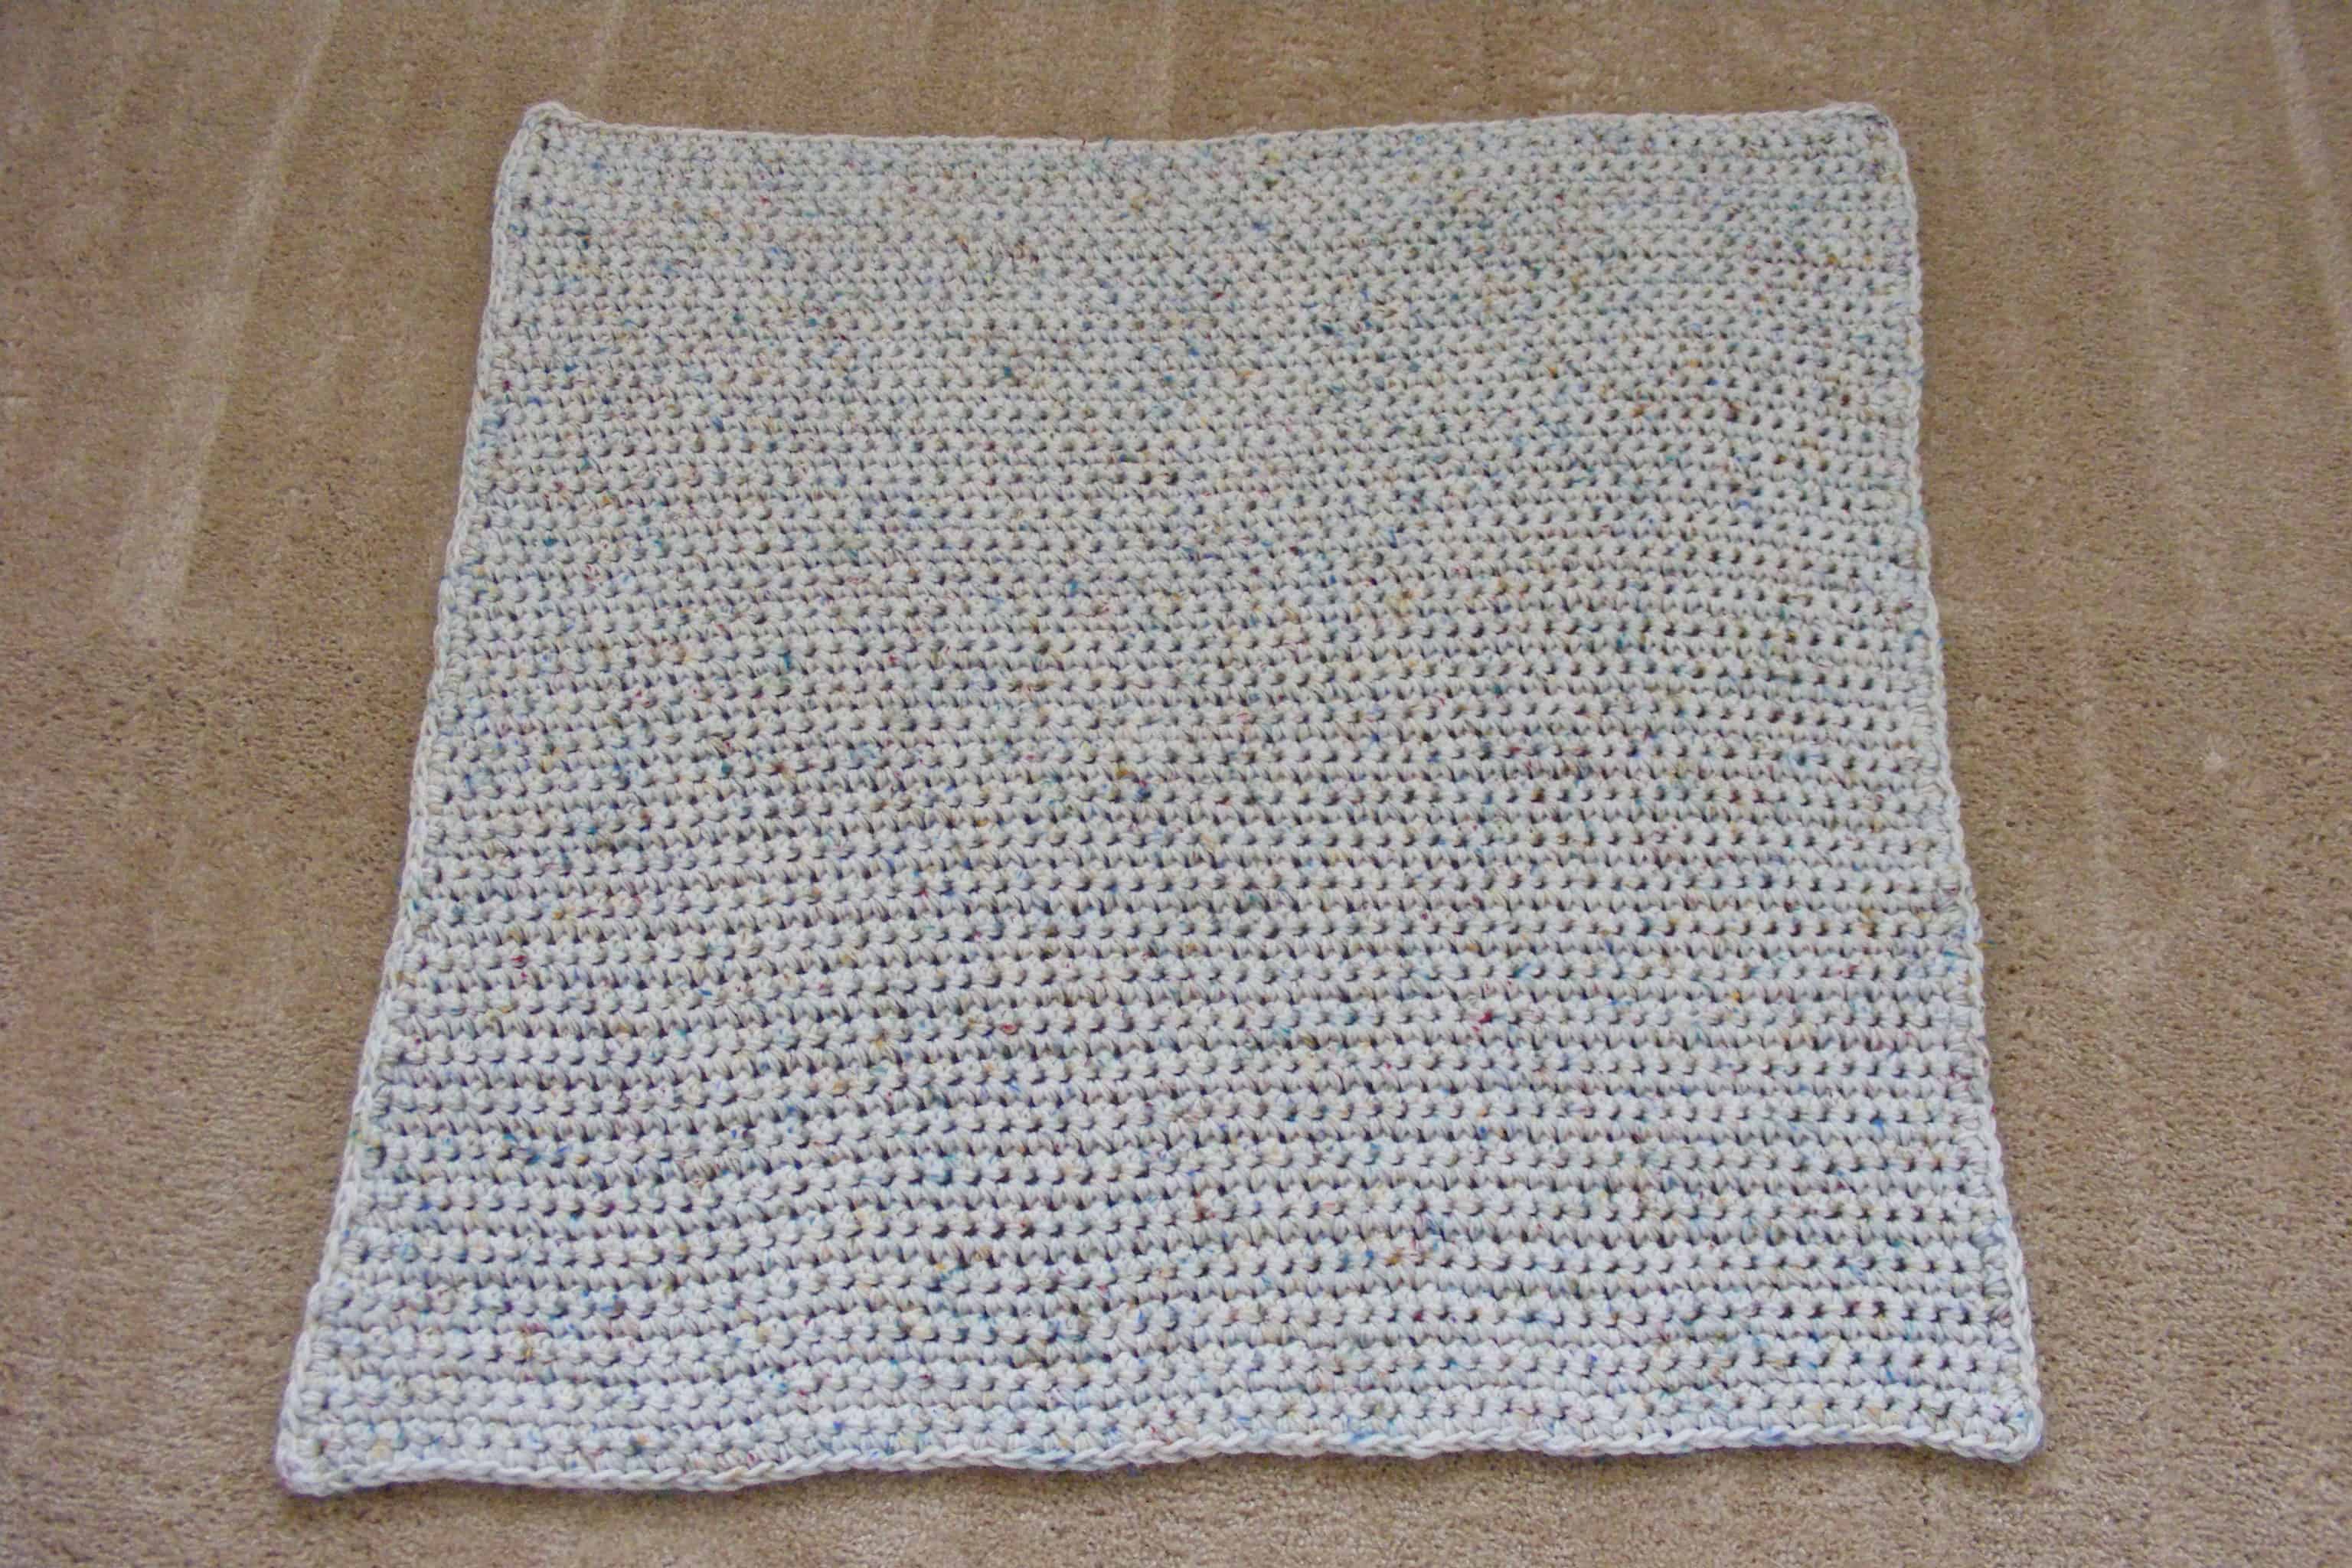 Single crochet baby blanket